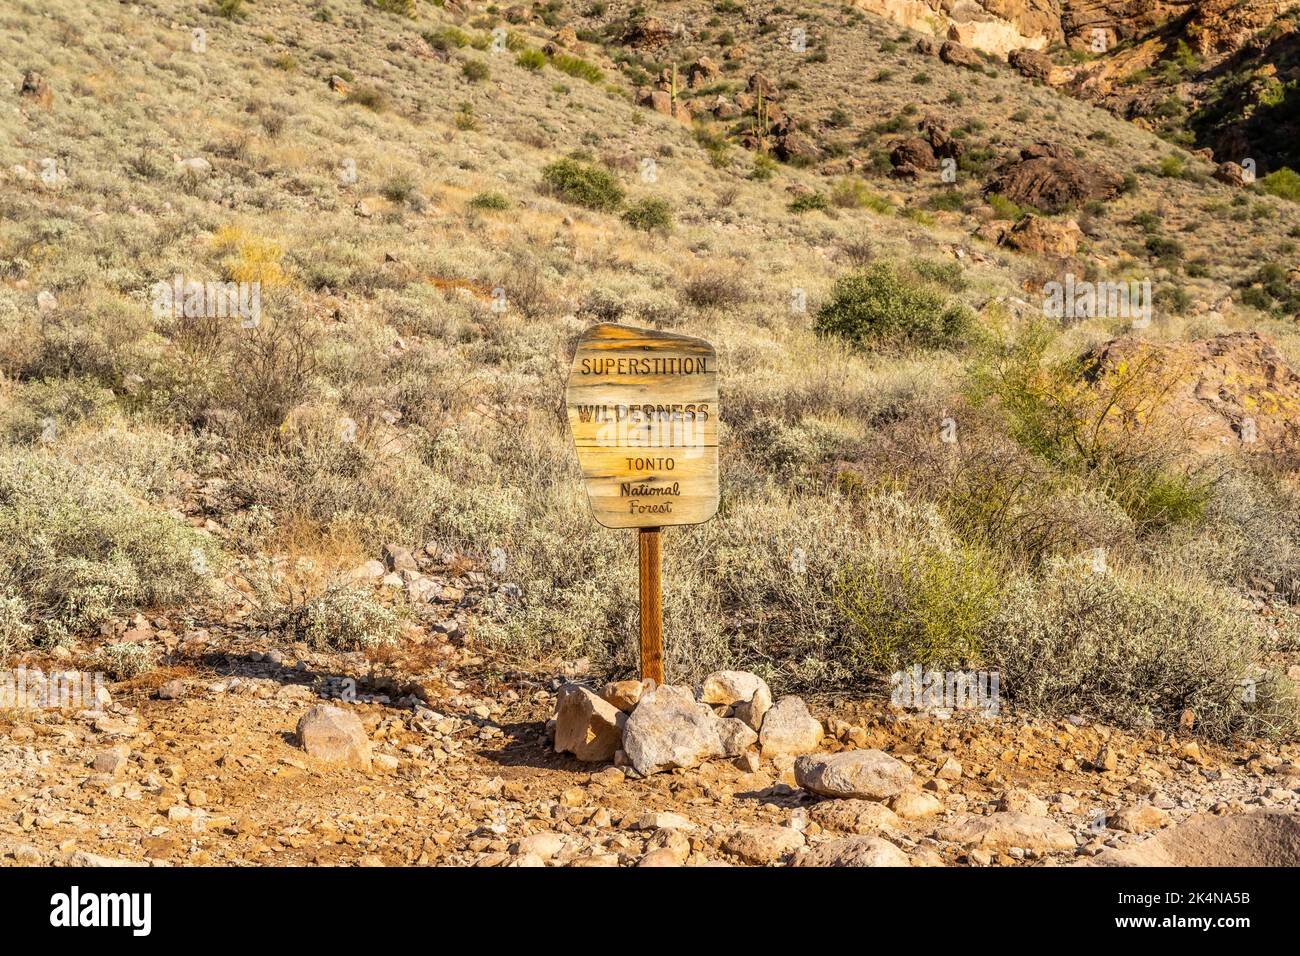 Lost Dutchman SP, AZ, USA - Dec 26, 2022: The Superstition Wilderness Trail Stock Photo